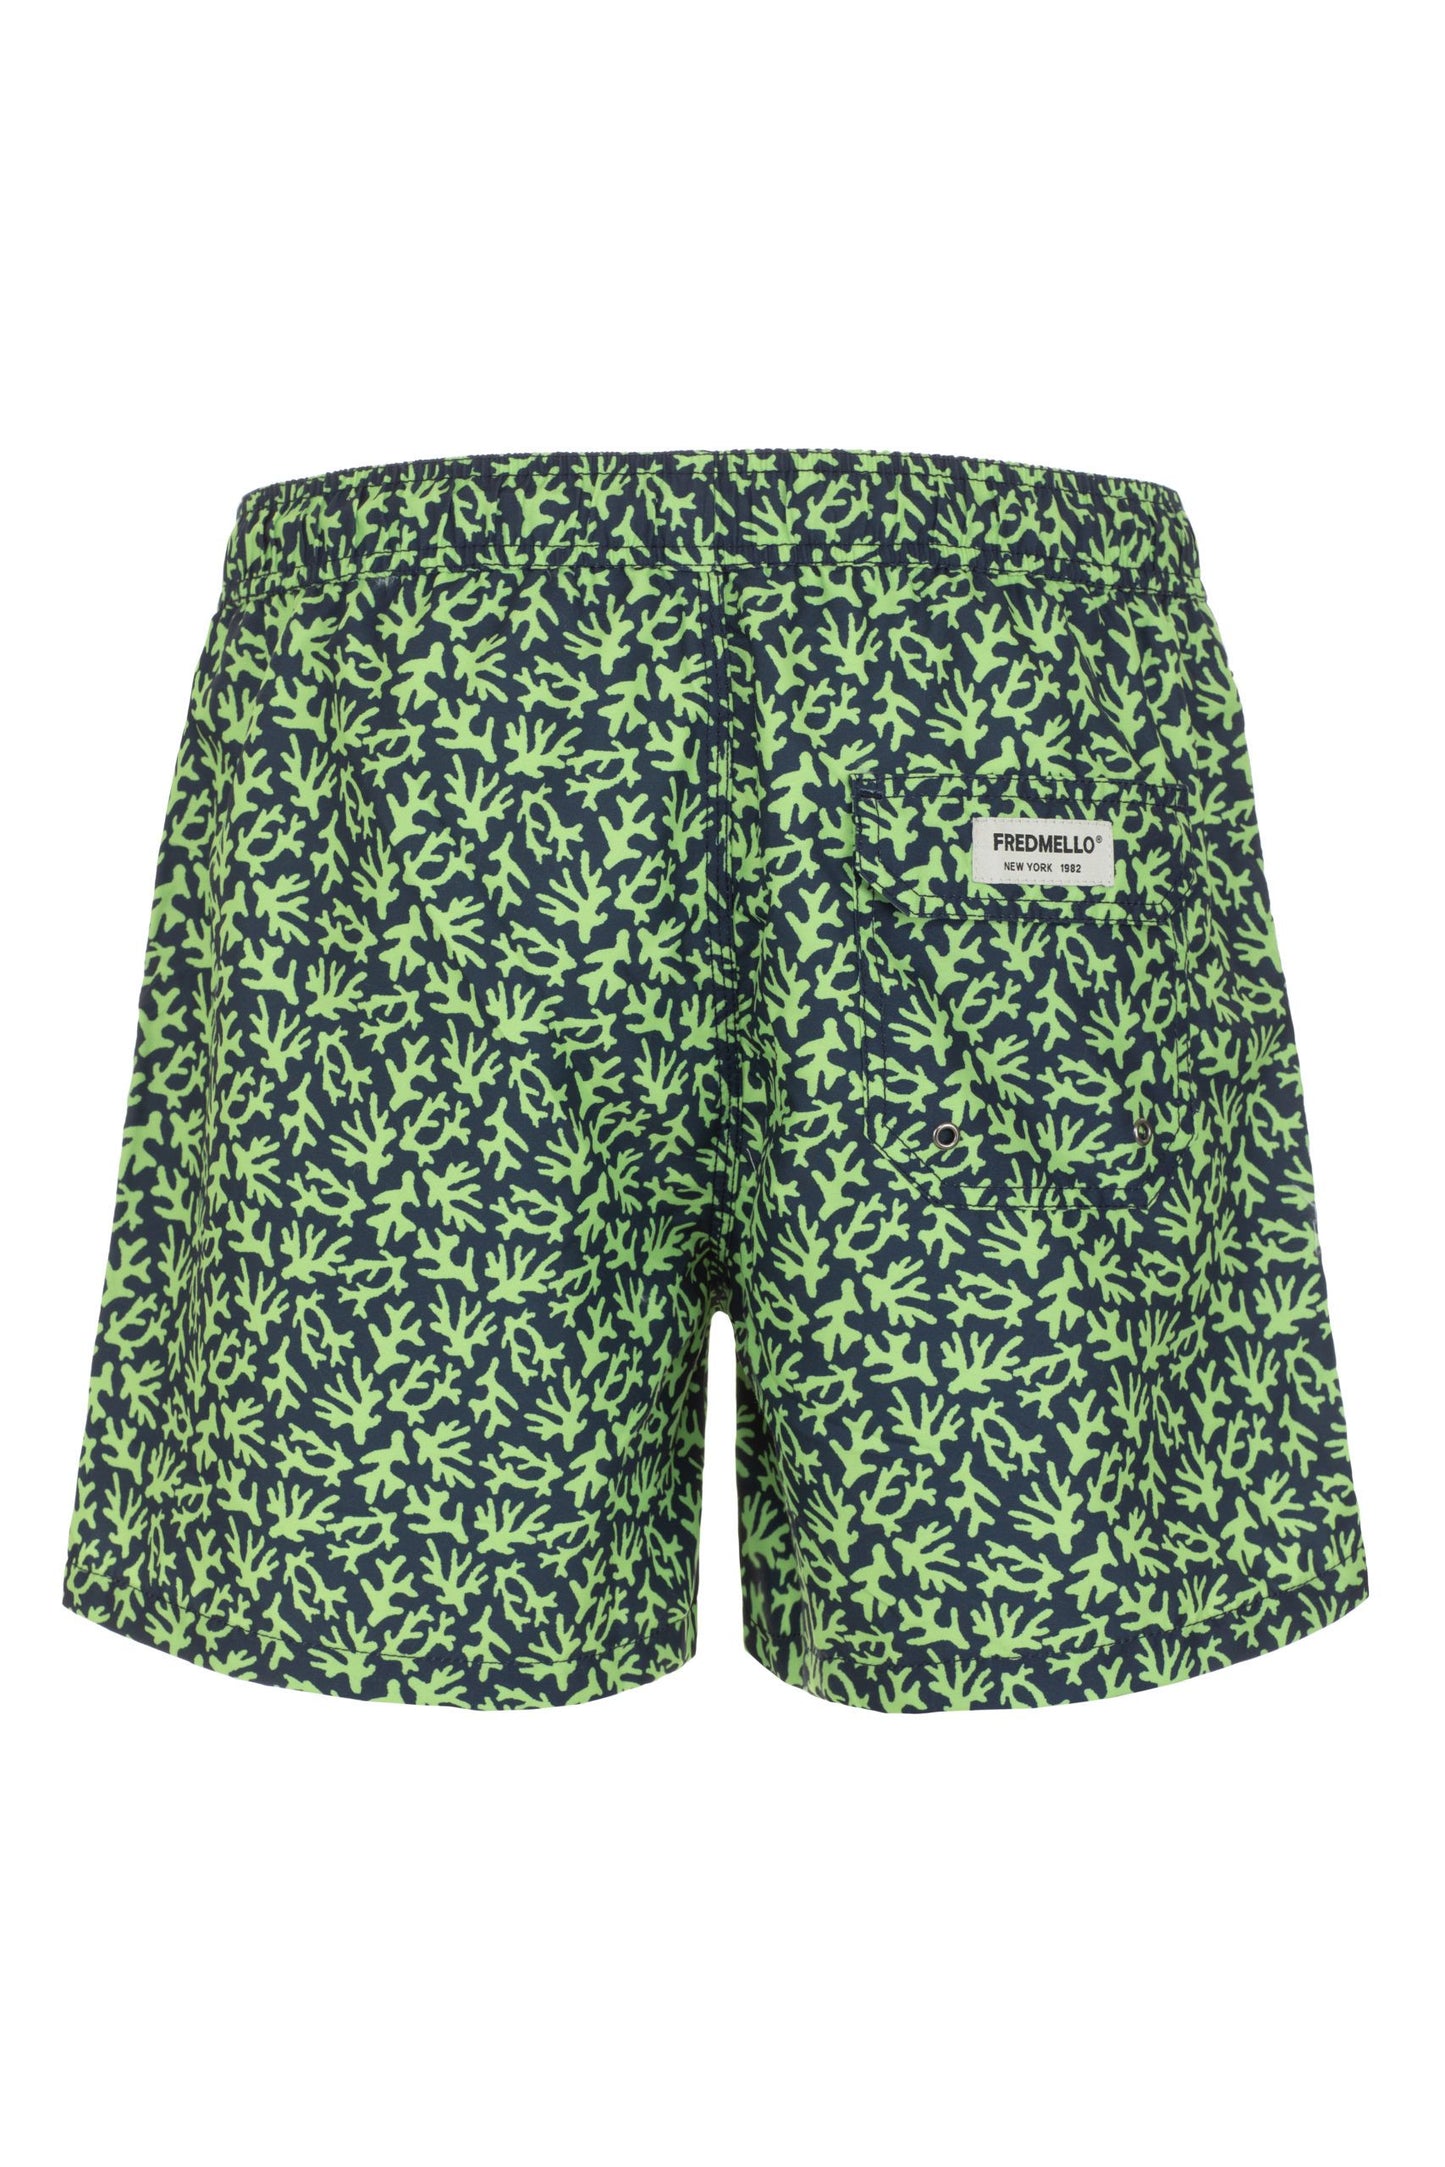 Fred Mello Emerald Green Beach Shorts for Trendy Summer Days